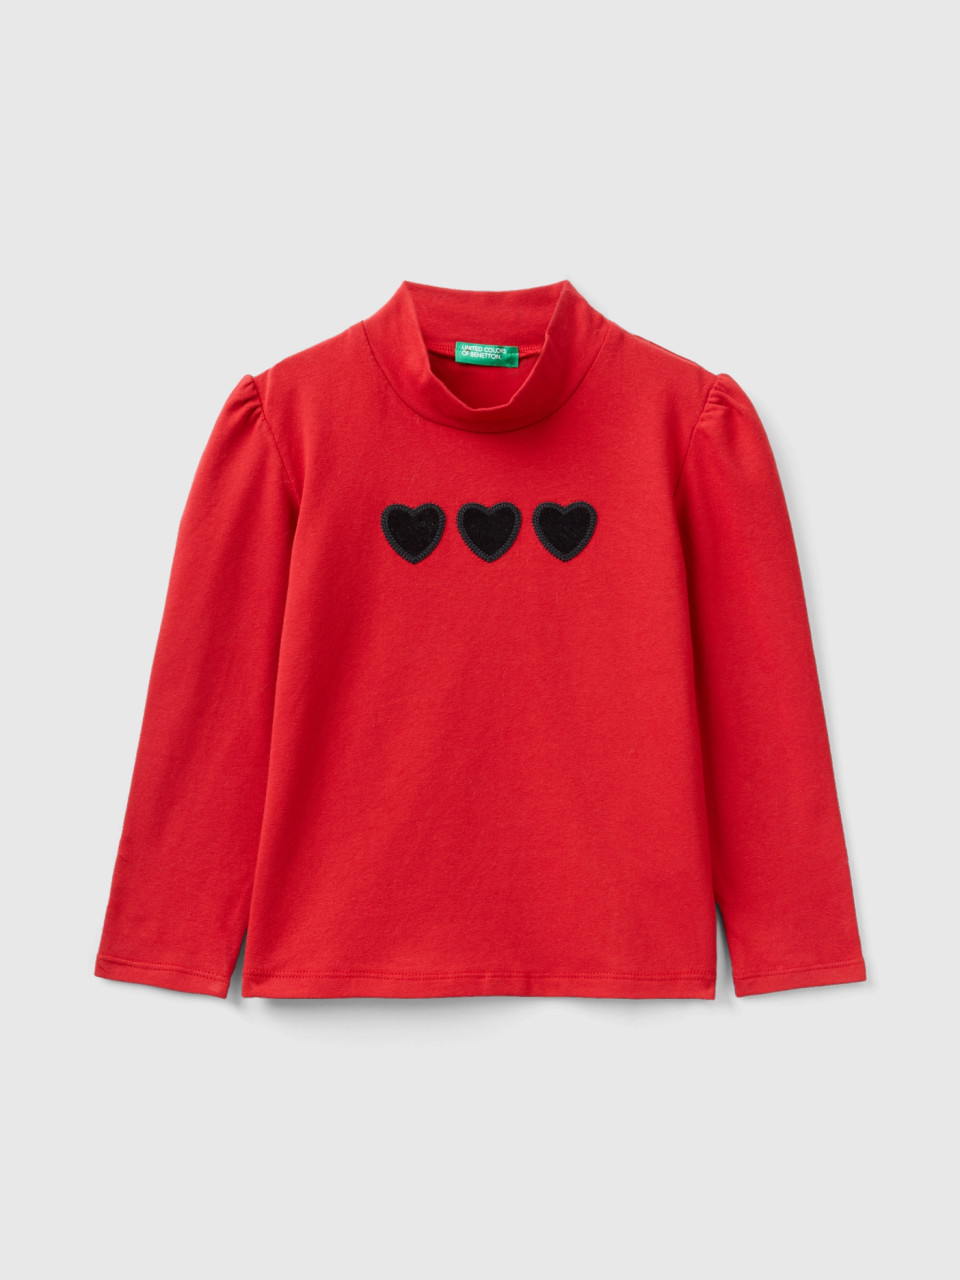 Benetton, T-shirt With Velvet Heart Patch, Red, Kids